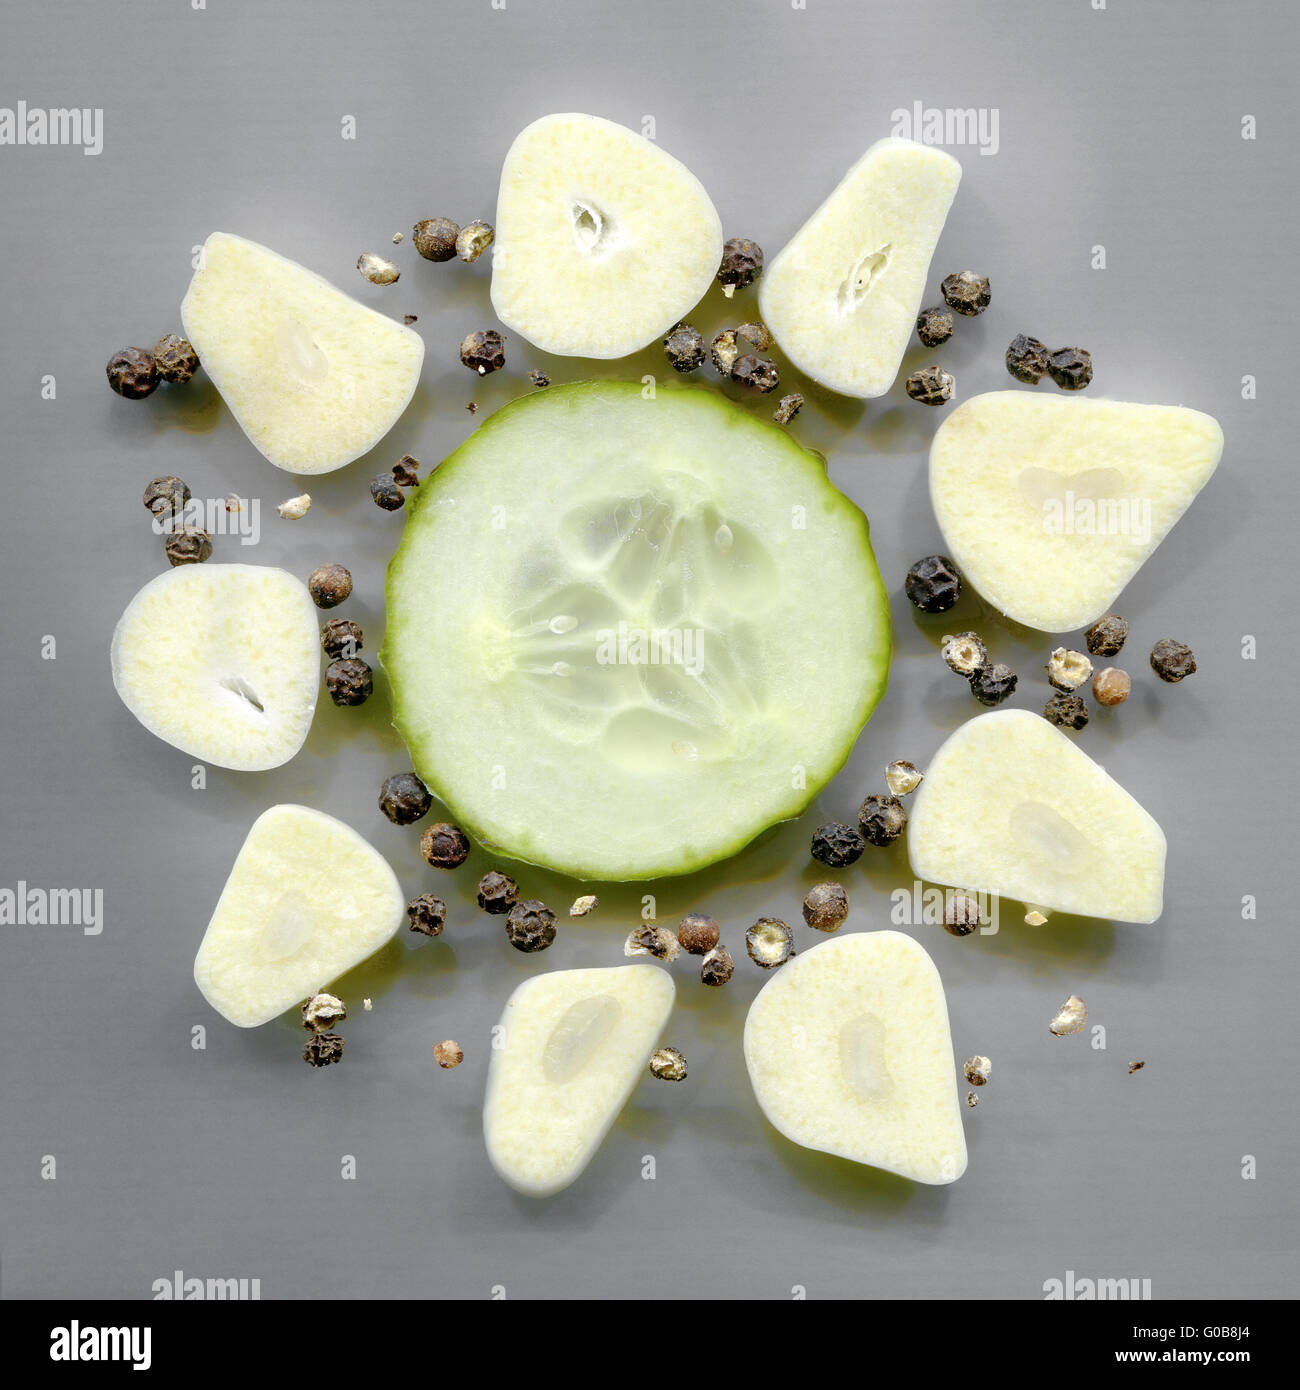 cucumber slice, garlic cloves and black peppercorn Stock Photo